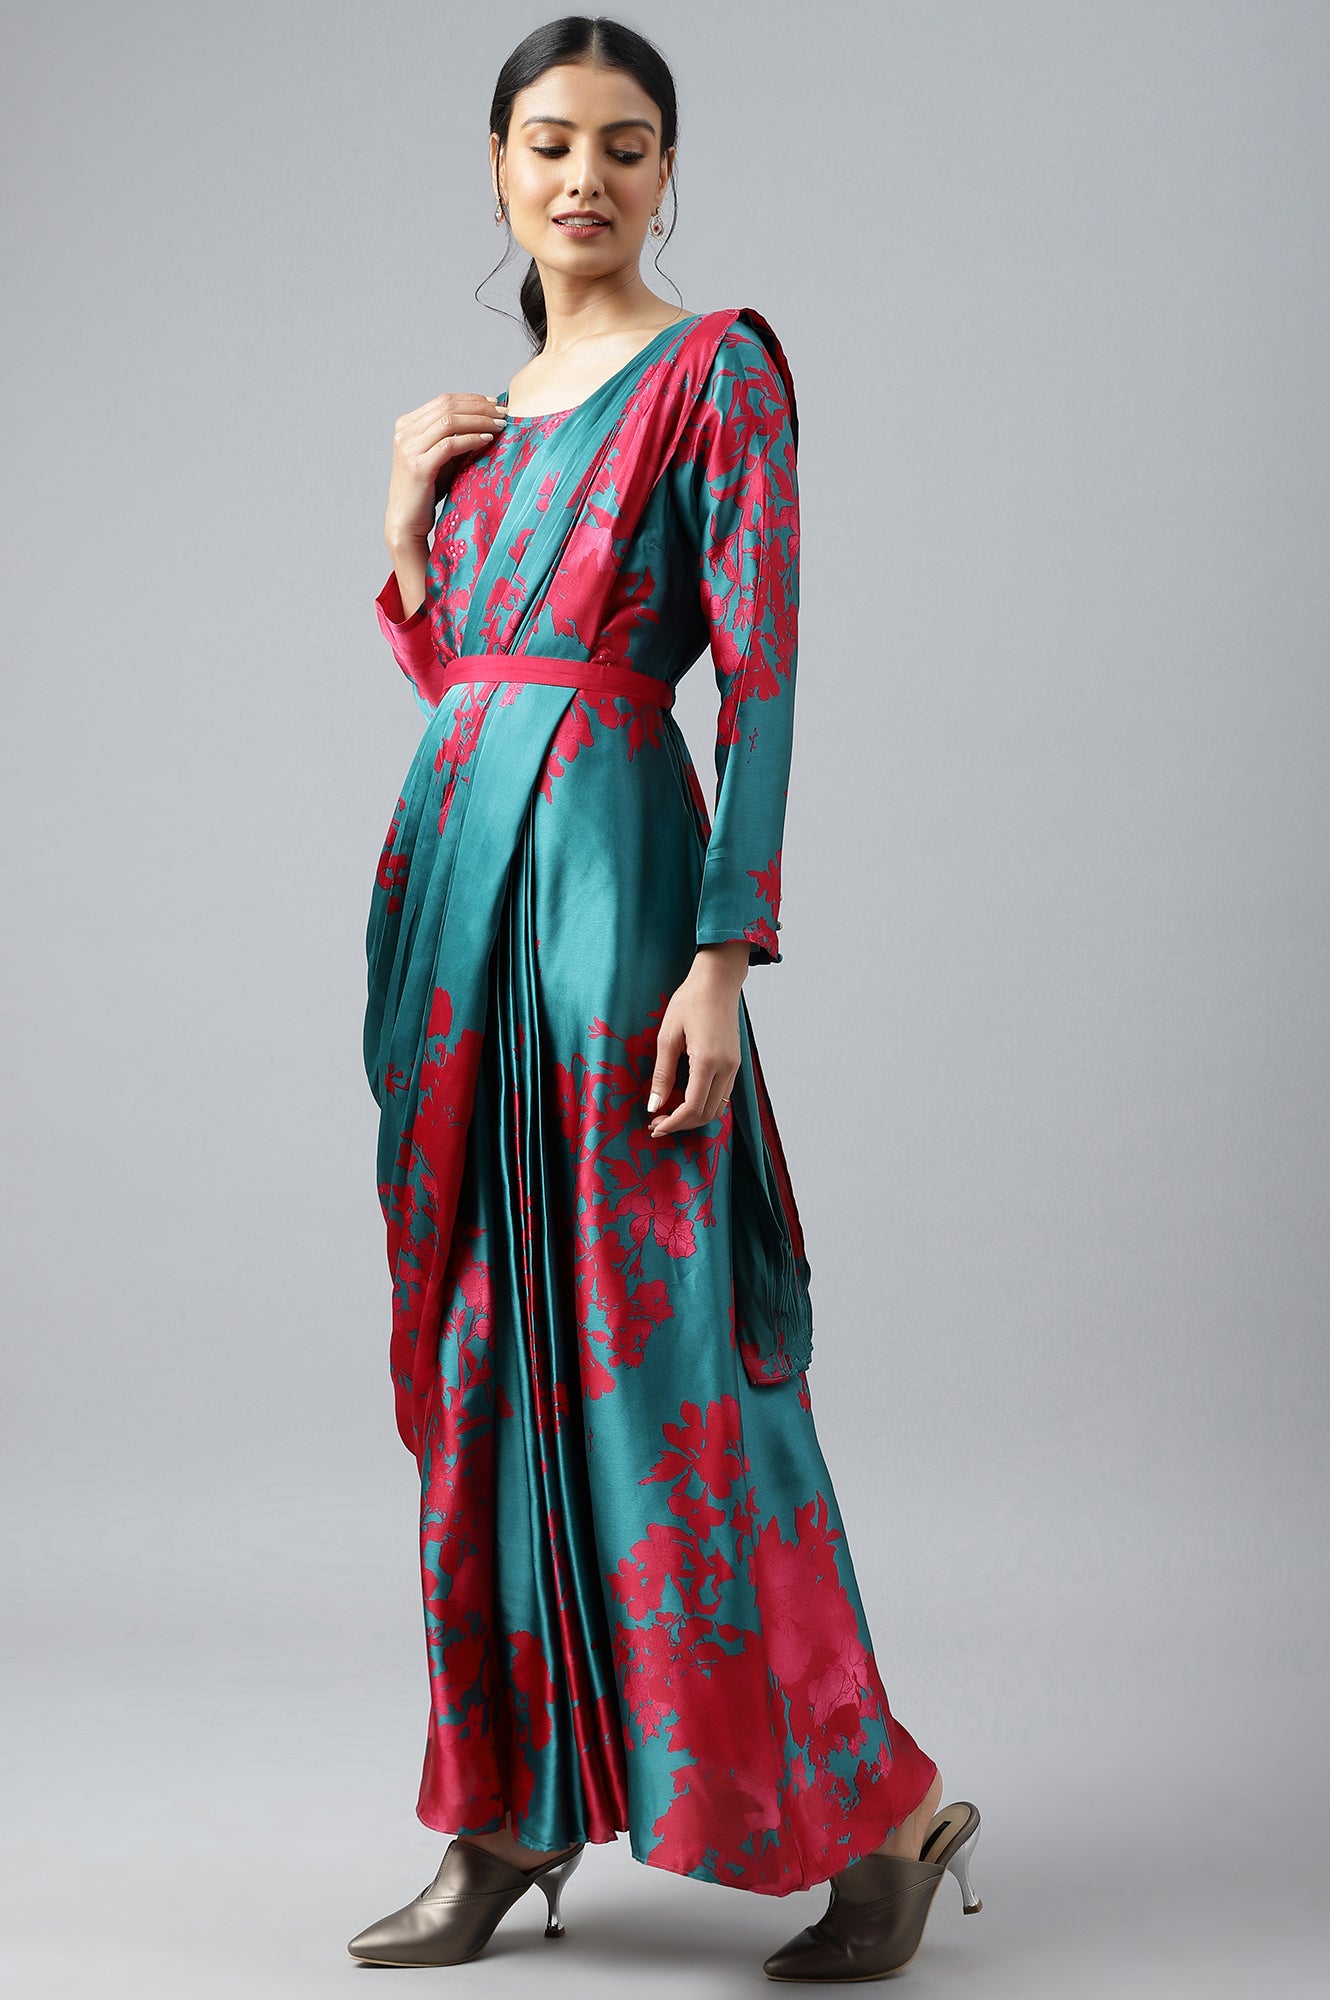 Dark Pink And Gree Satin Predape Saree Dress